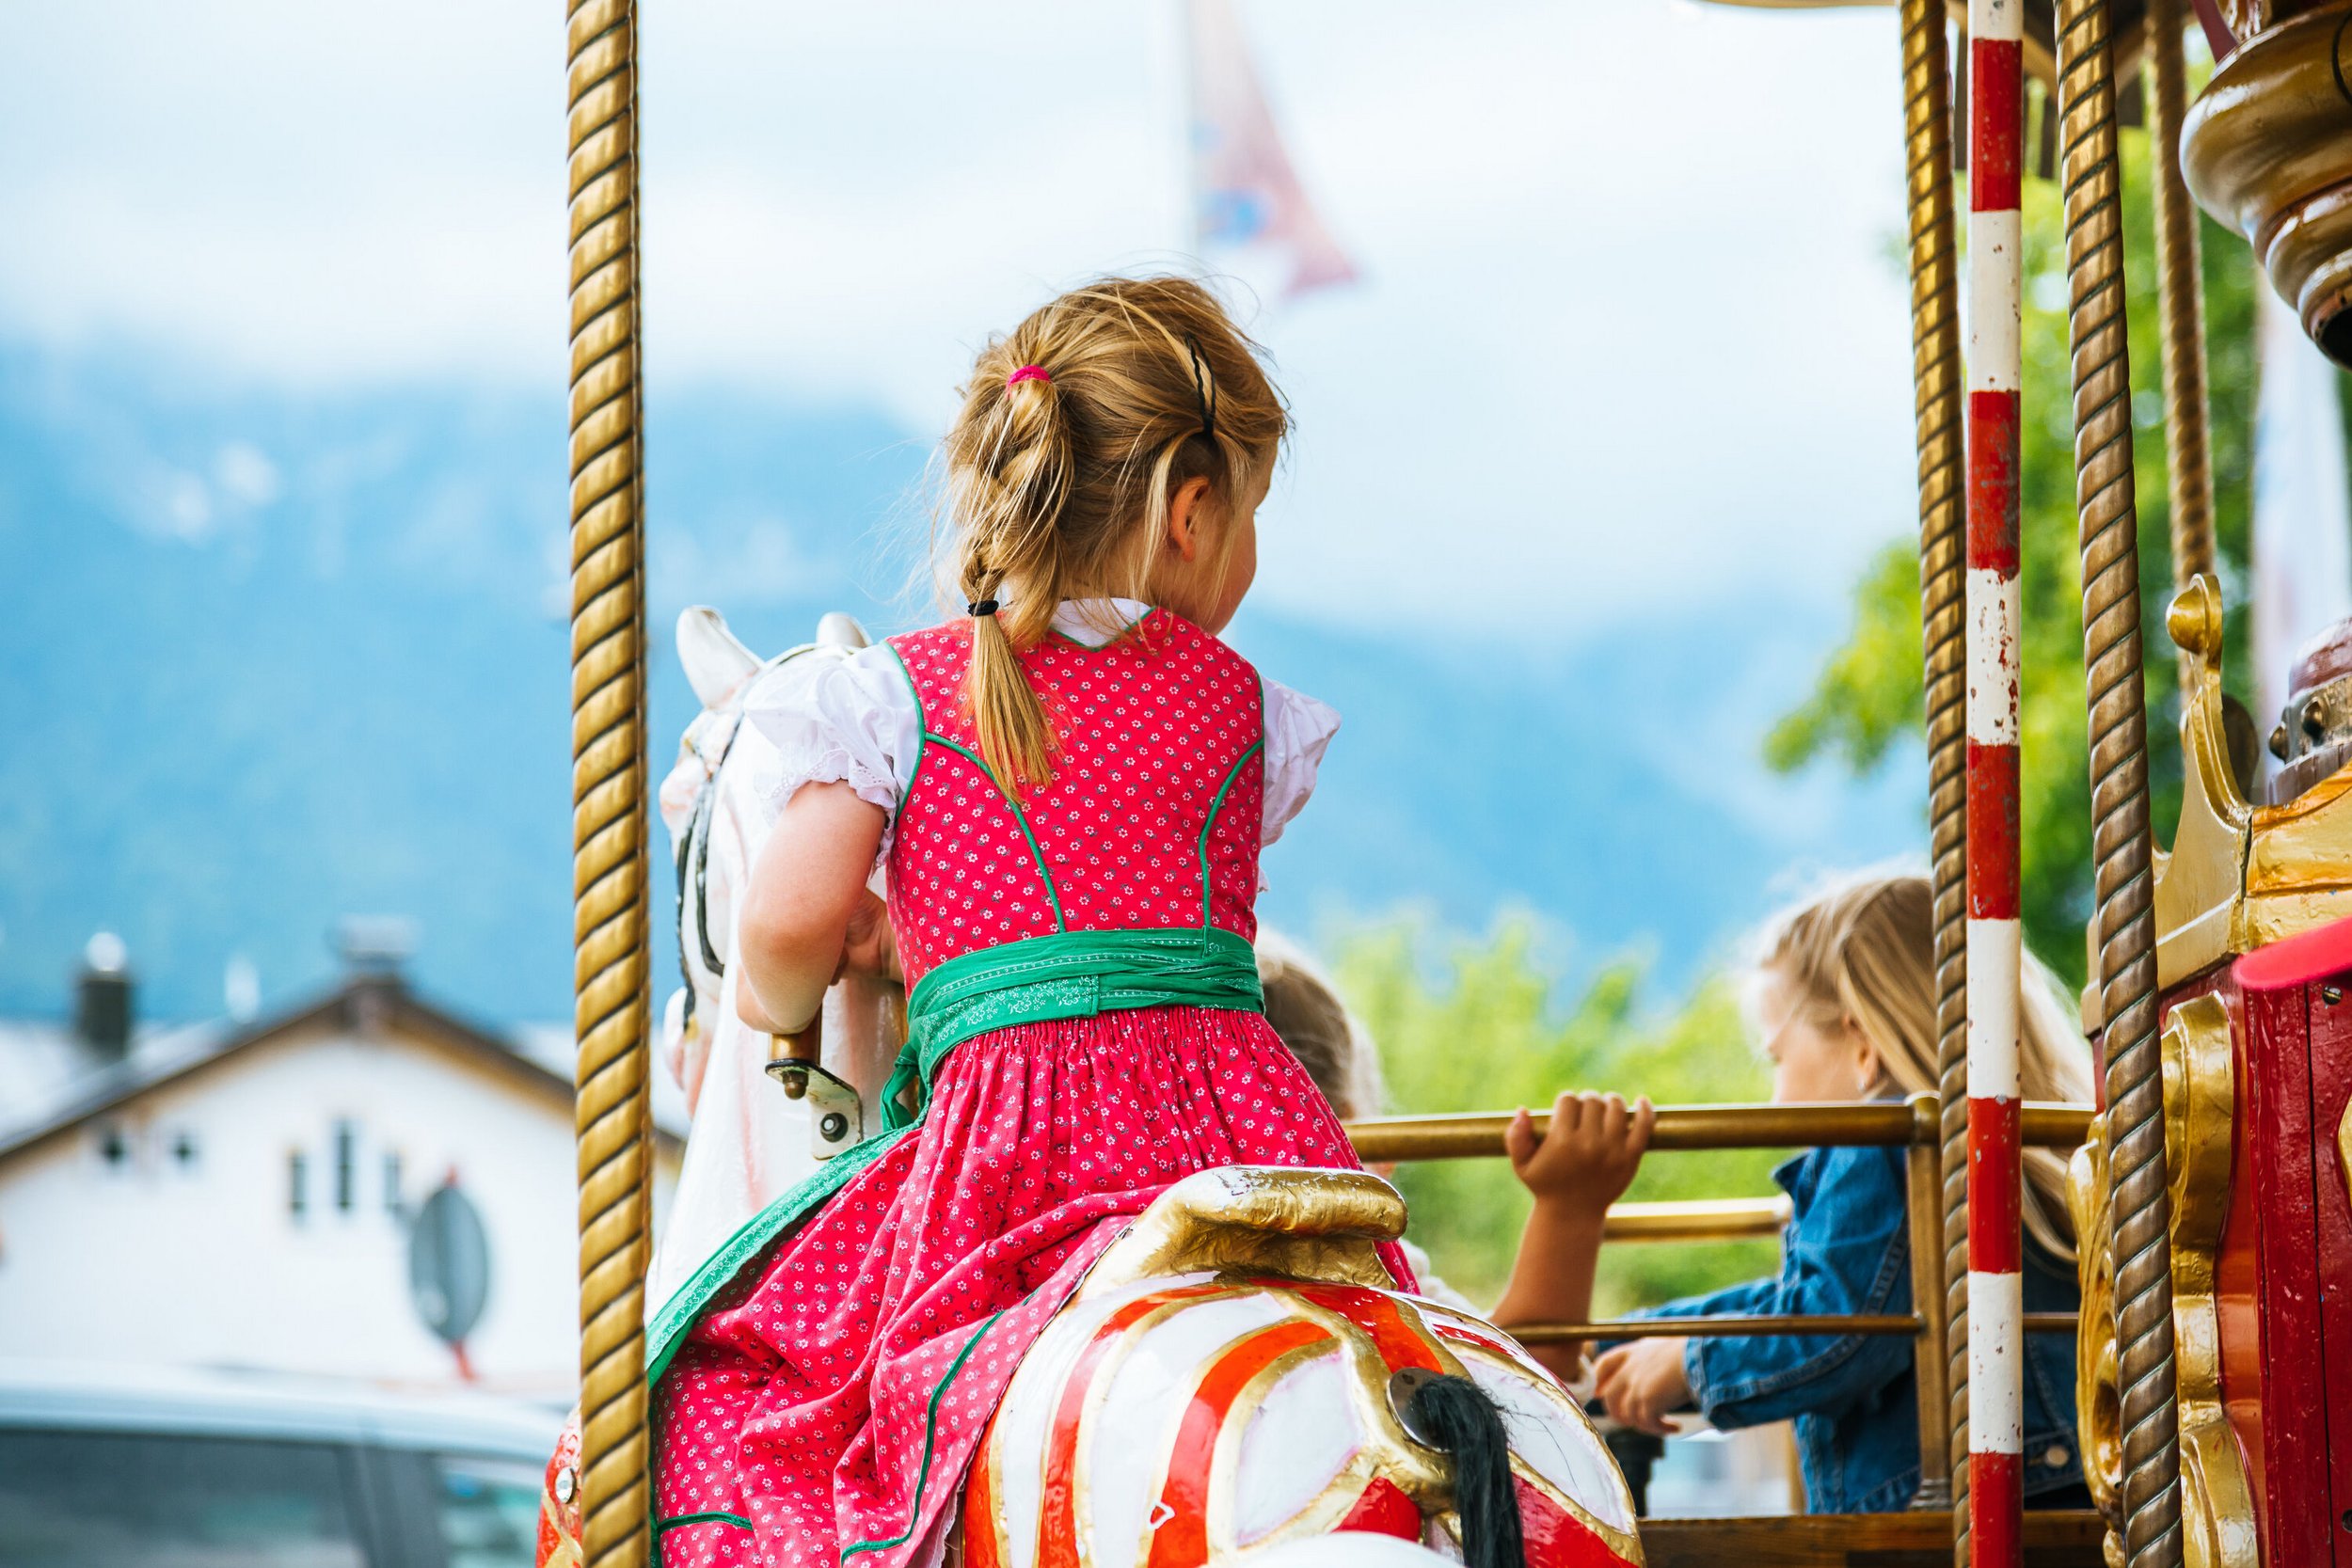 Girl in dirndl dress on a rocking horse